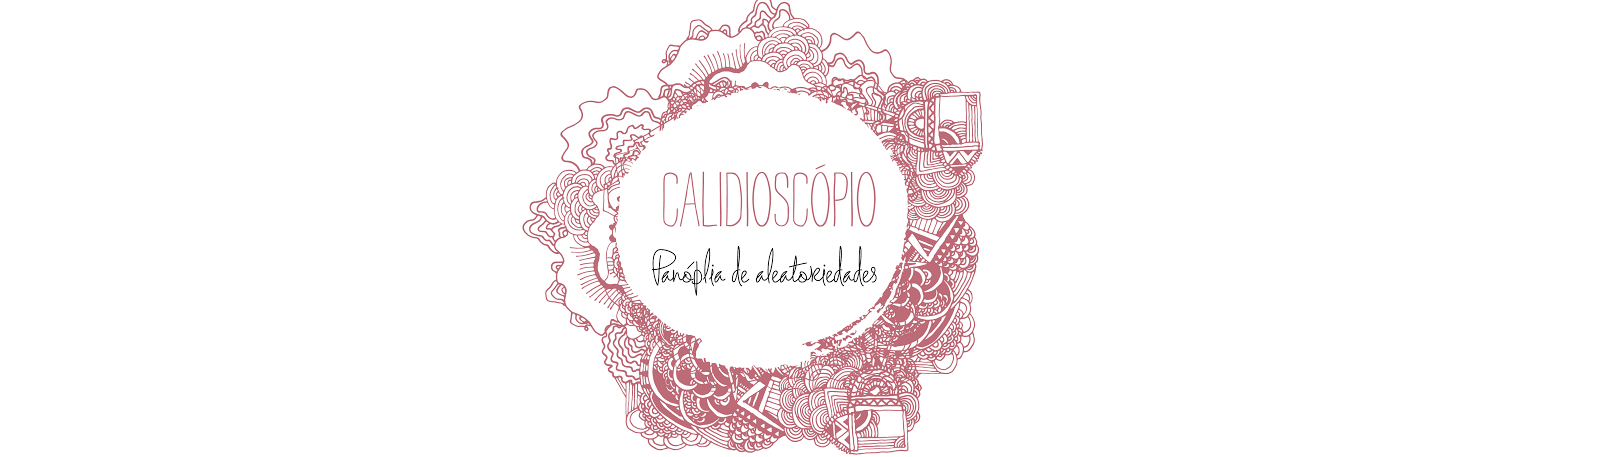 Calidioscópio